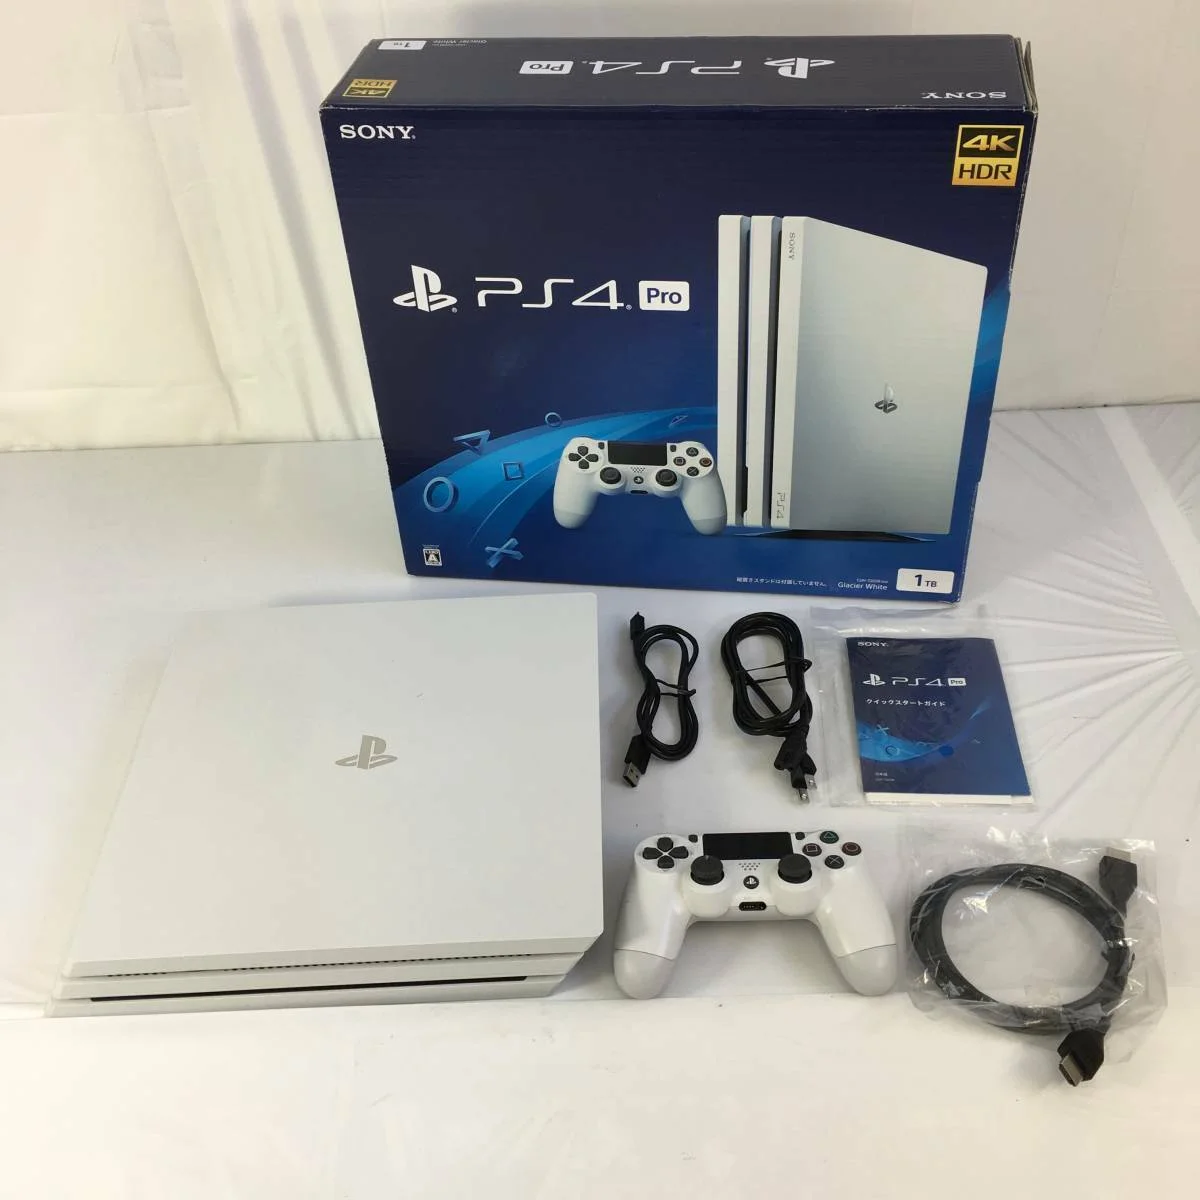  Sony PlayStation 4 White Pro (AUS PAL)